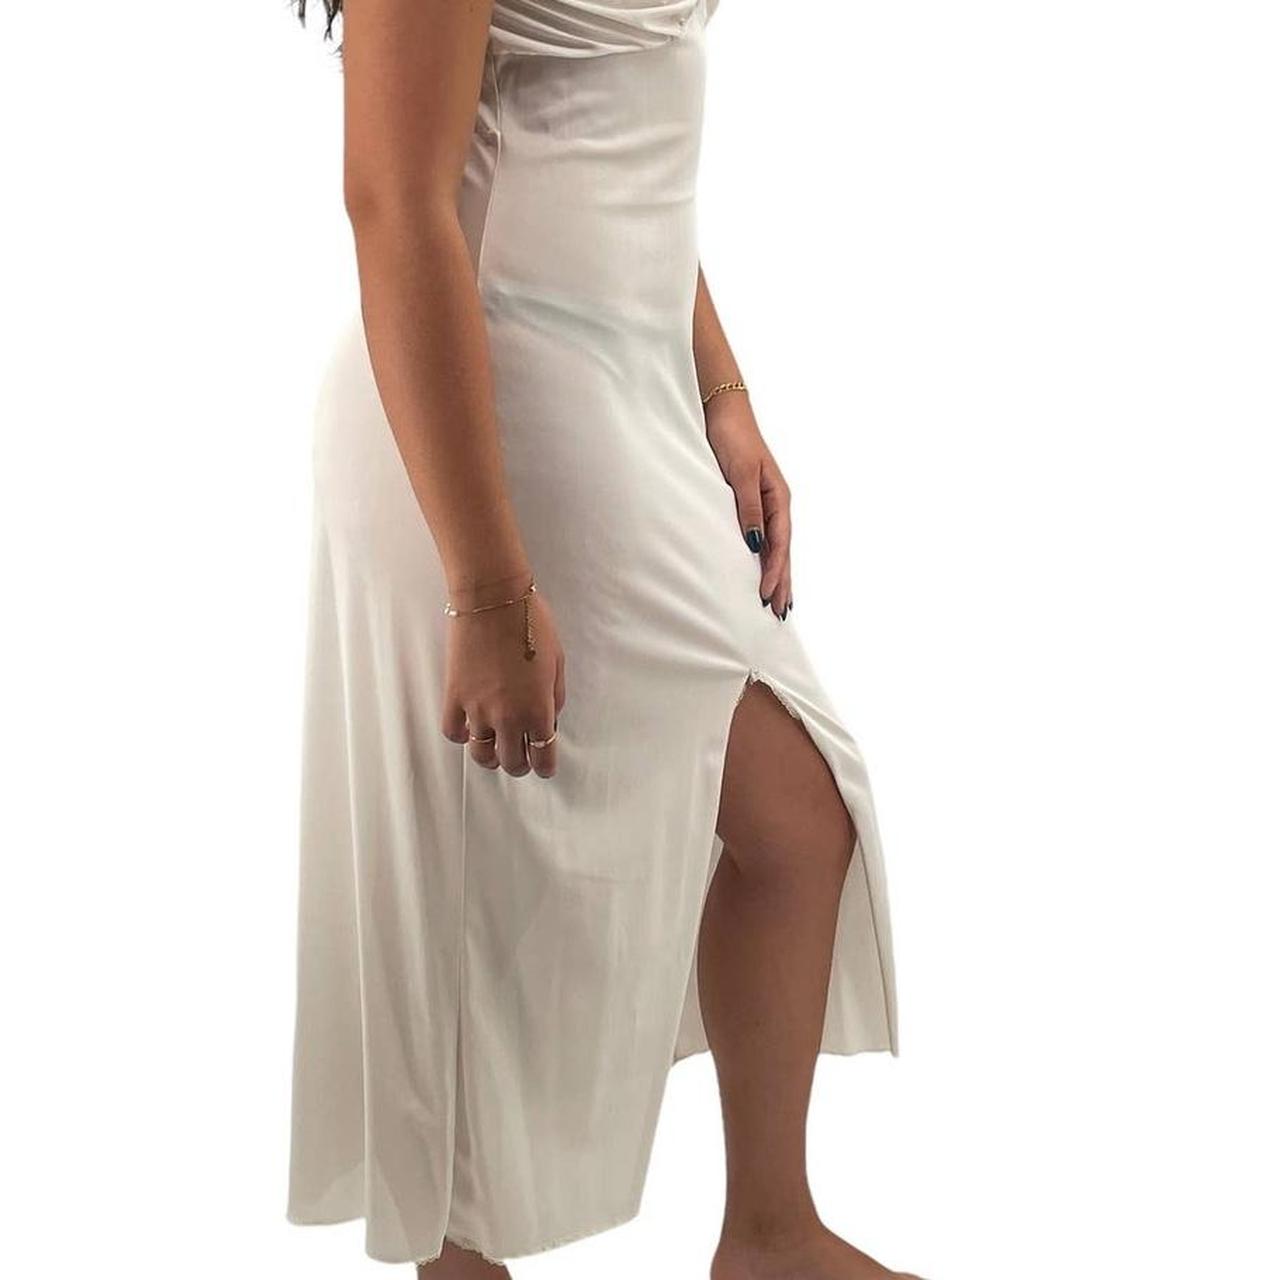 Vintage slip / nightgown in off-white 100% nylon - Depop